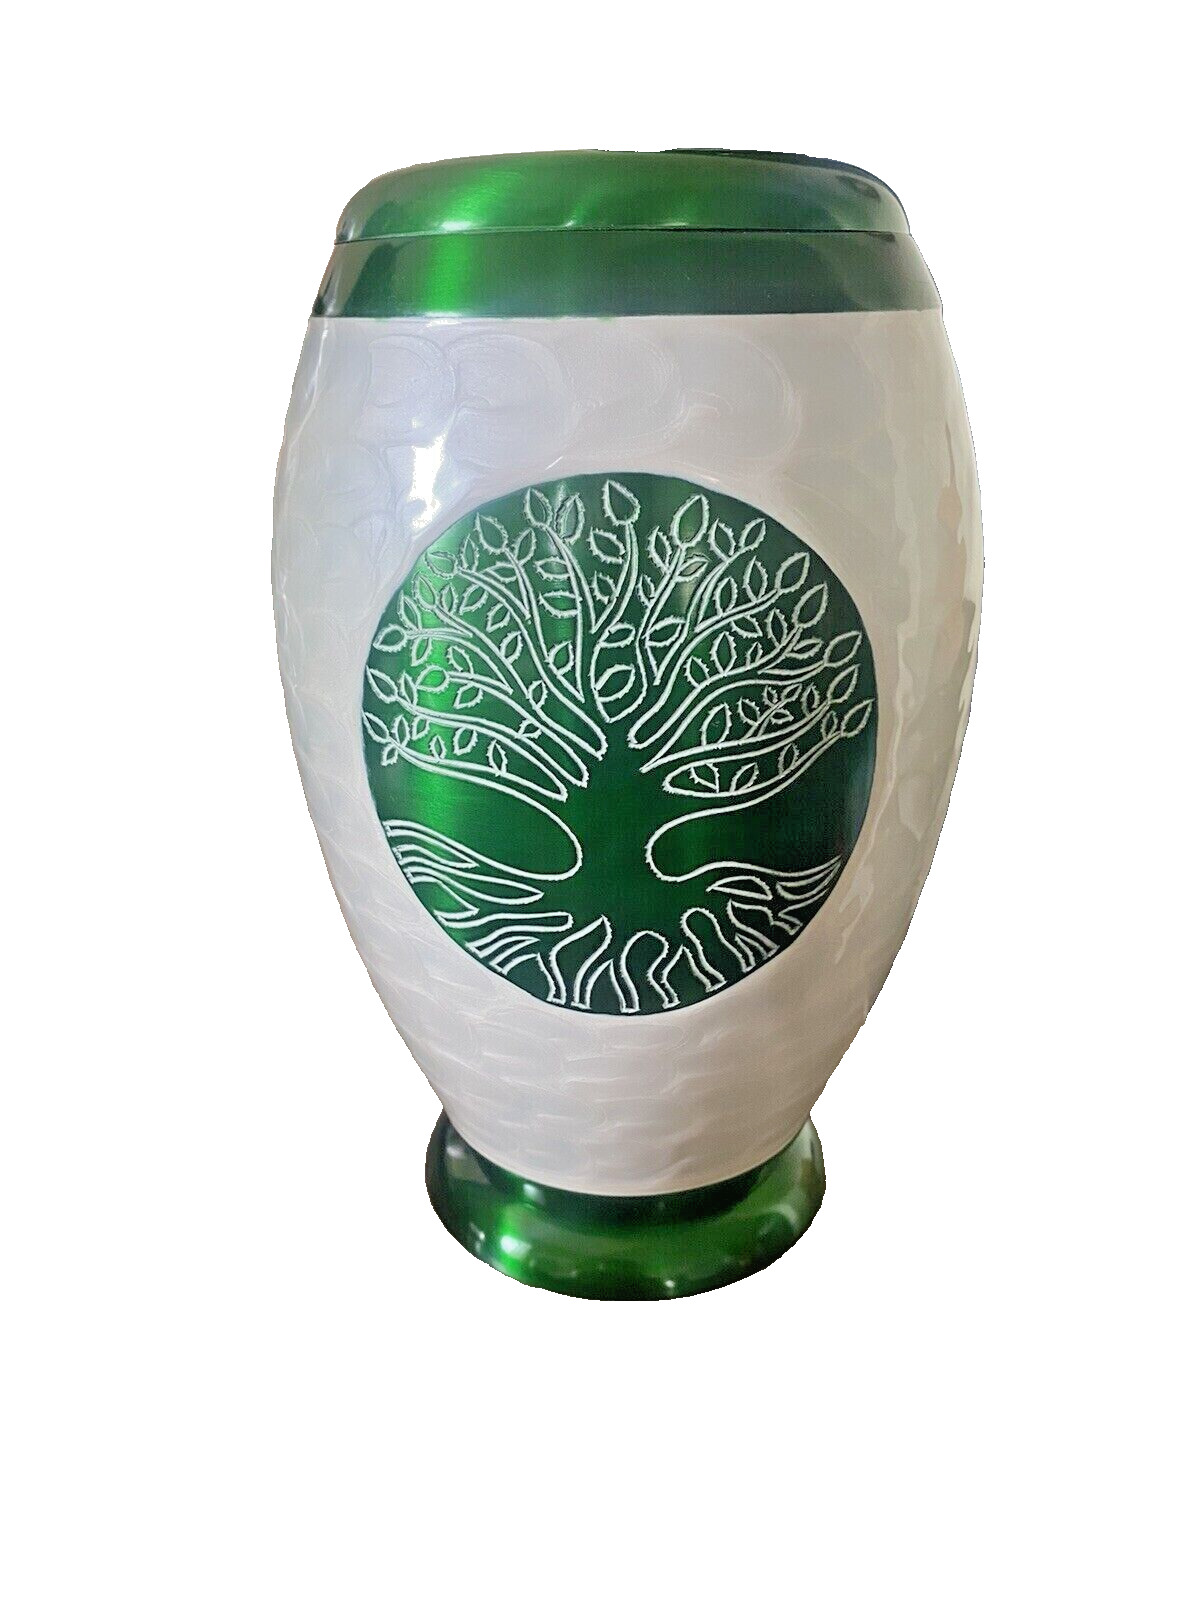 Elegant Medium Size Ceramic And Metal Urn Green And Cream 10.5 Inches New